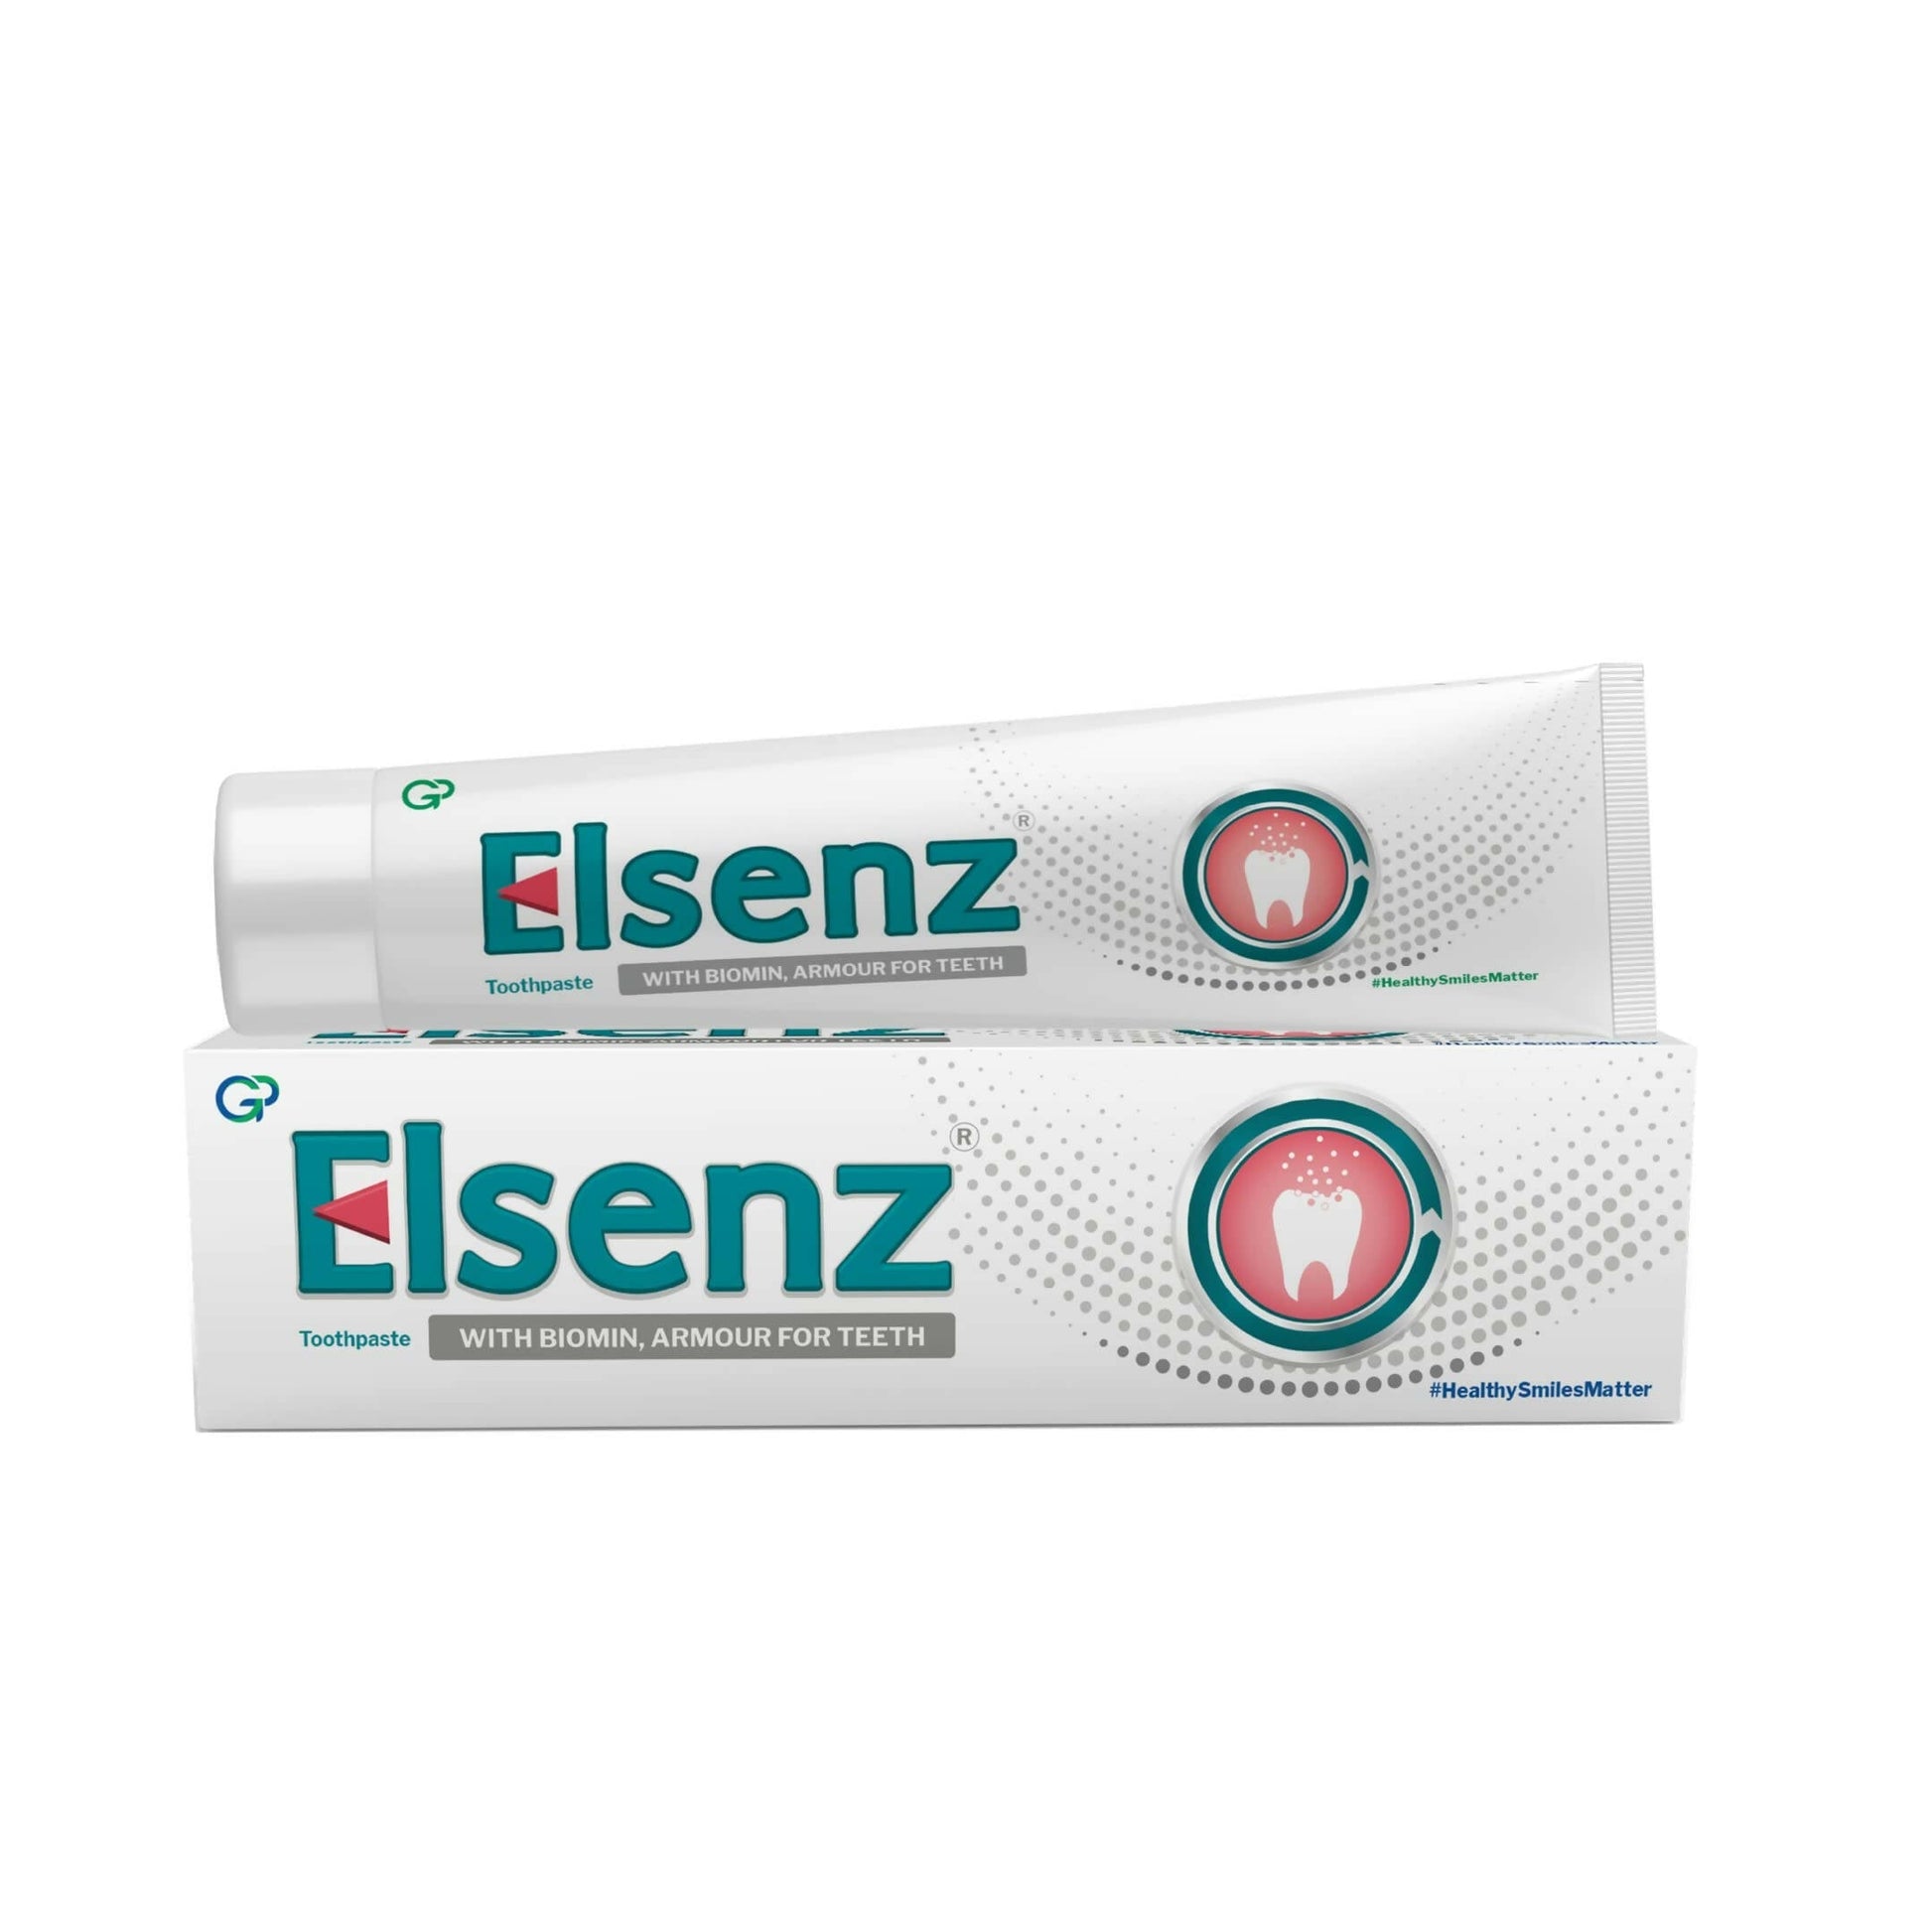 Elsenz Anti Cavity Toothpaste - BUDNE